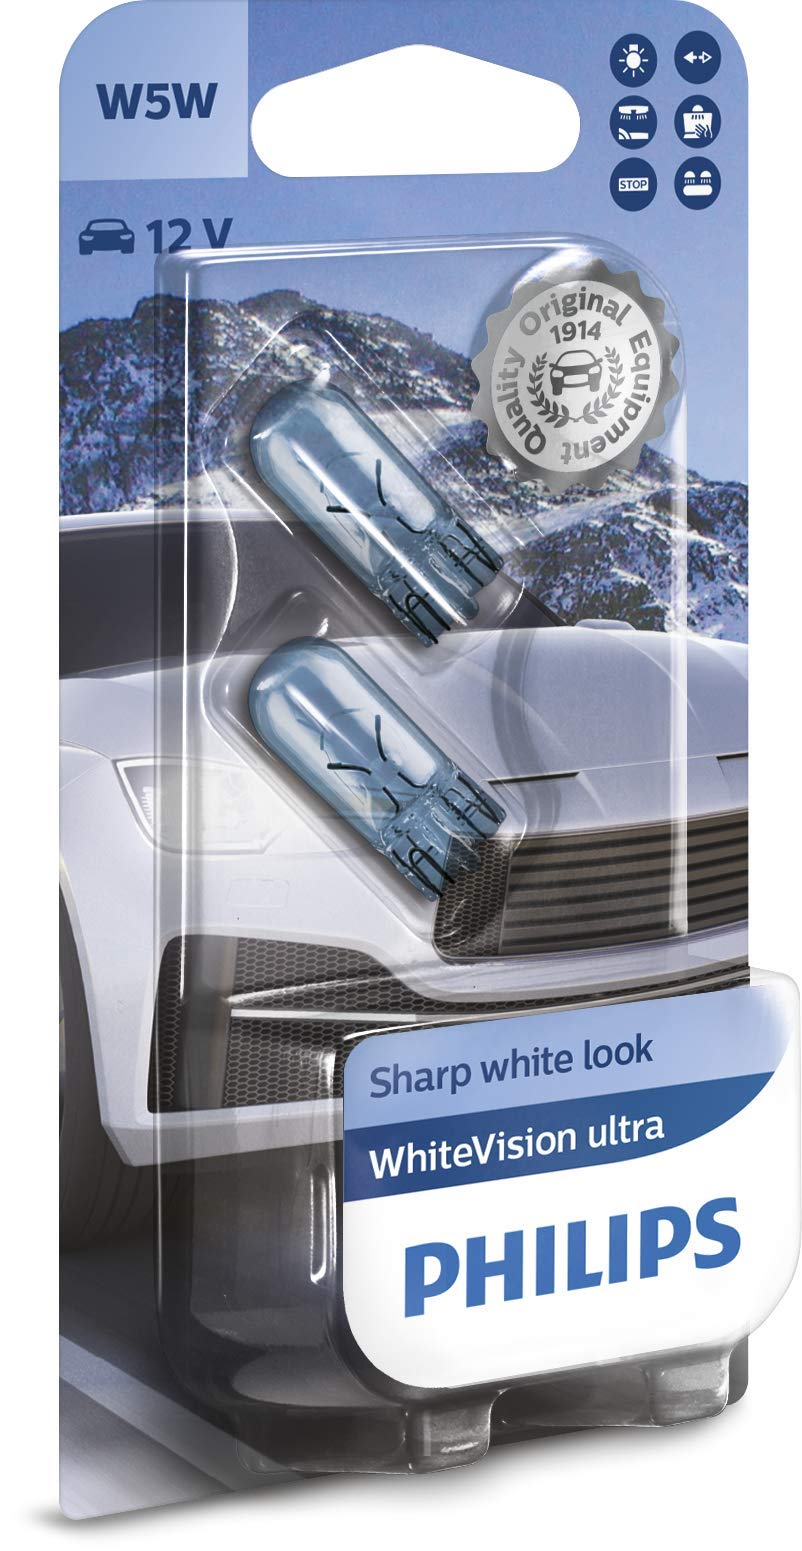 Philips WhiteVision ultra W5W Signallampe, Doppelblister, 35484330, Double blister von Philips